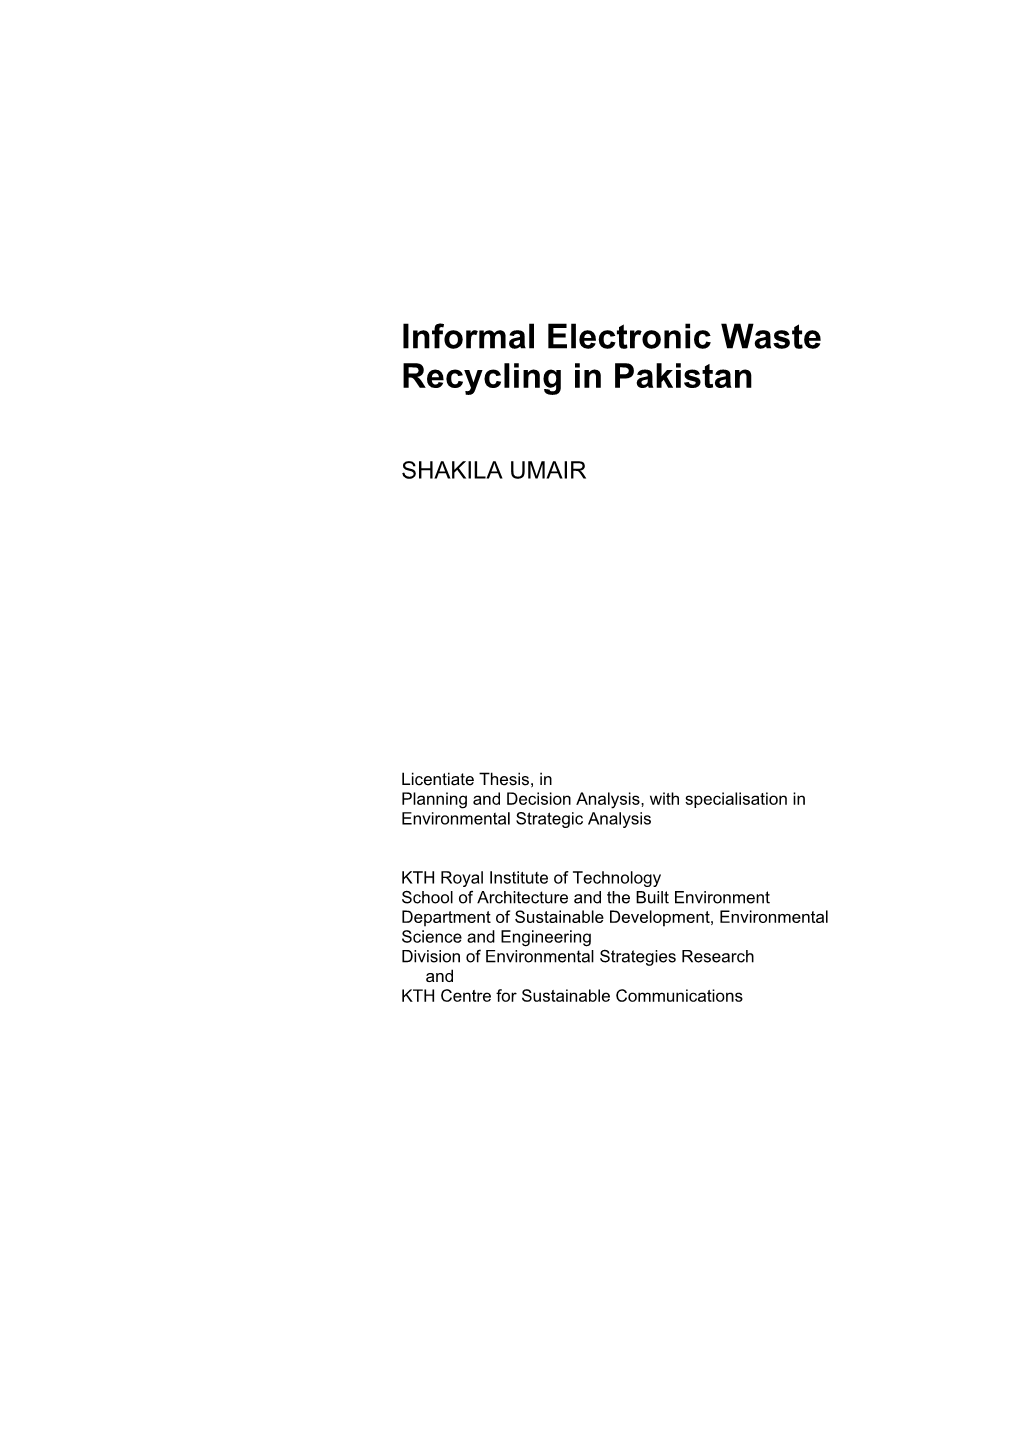 Informal Electronic Waste Recycling in Pakistan